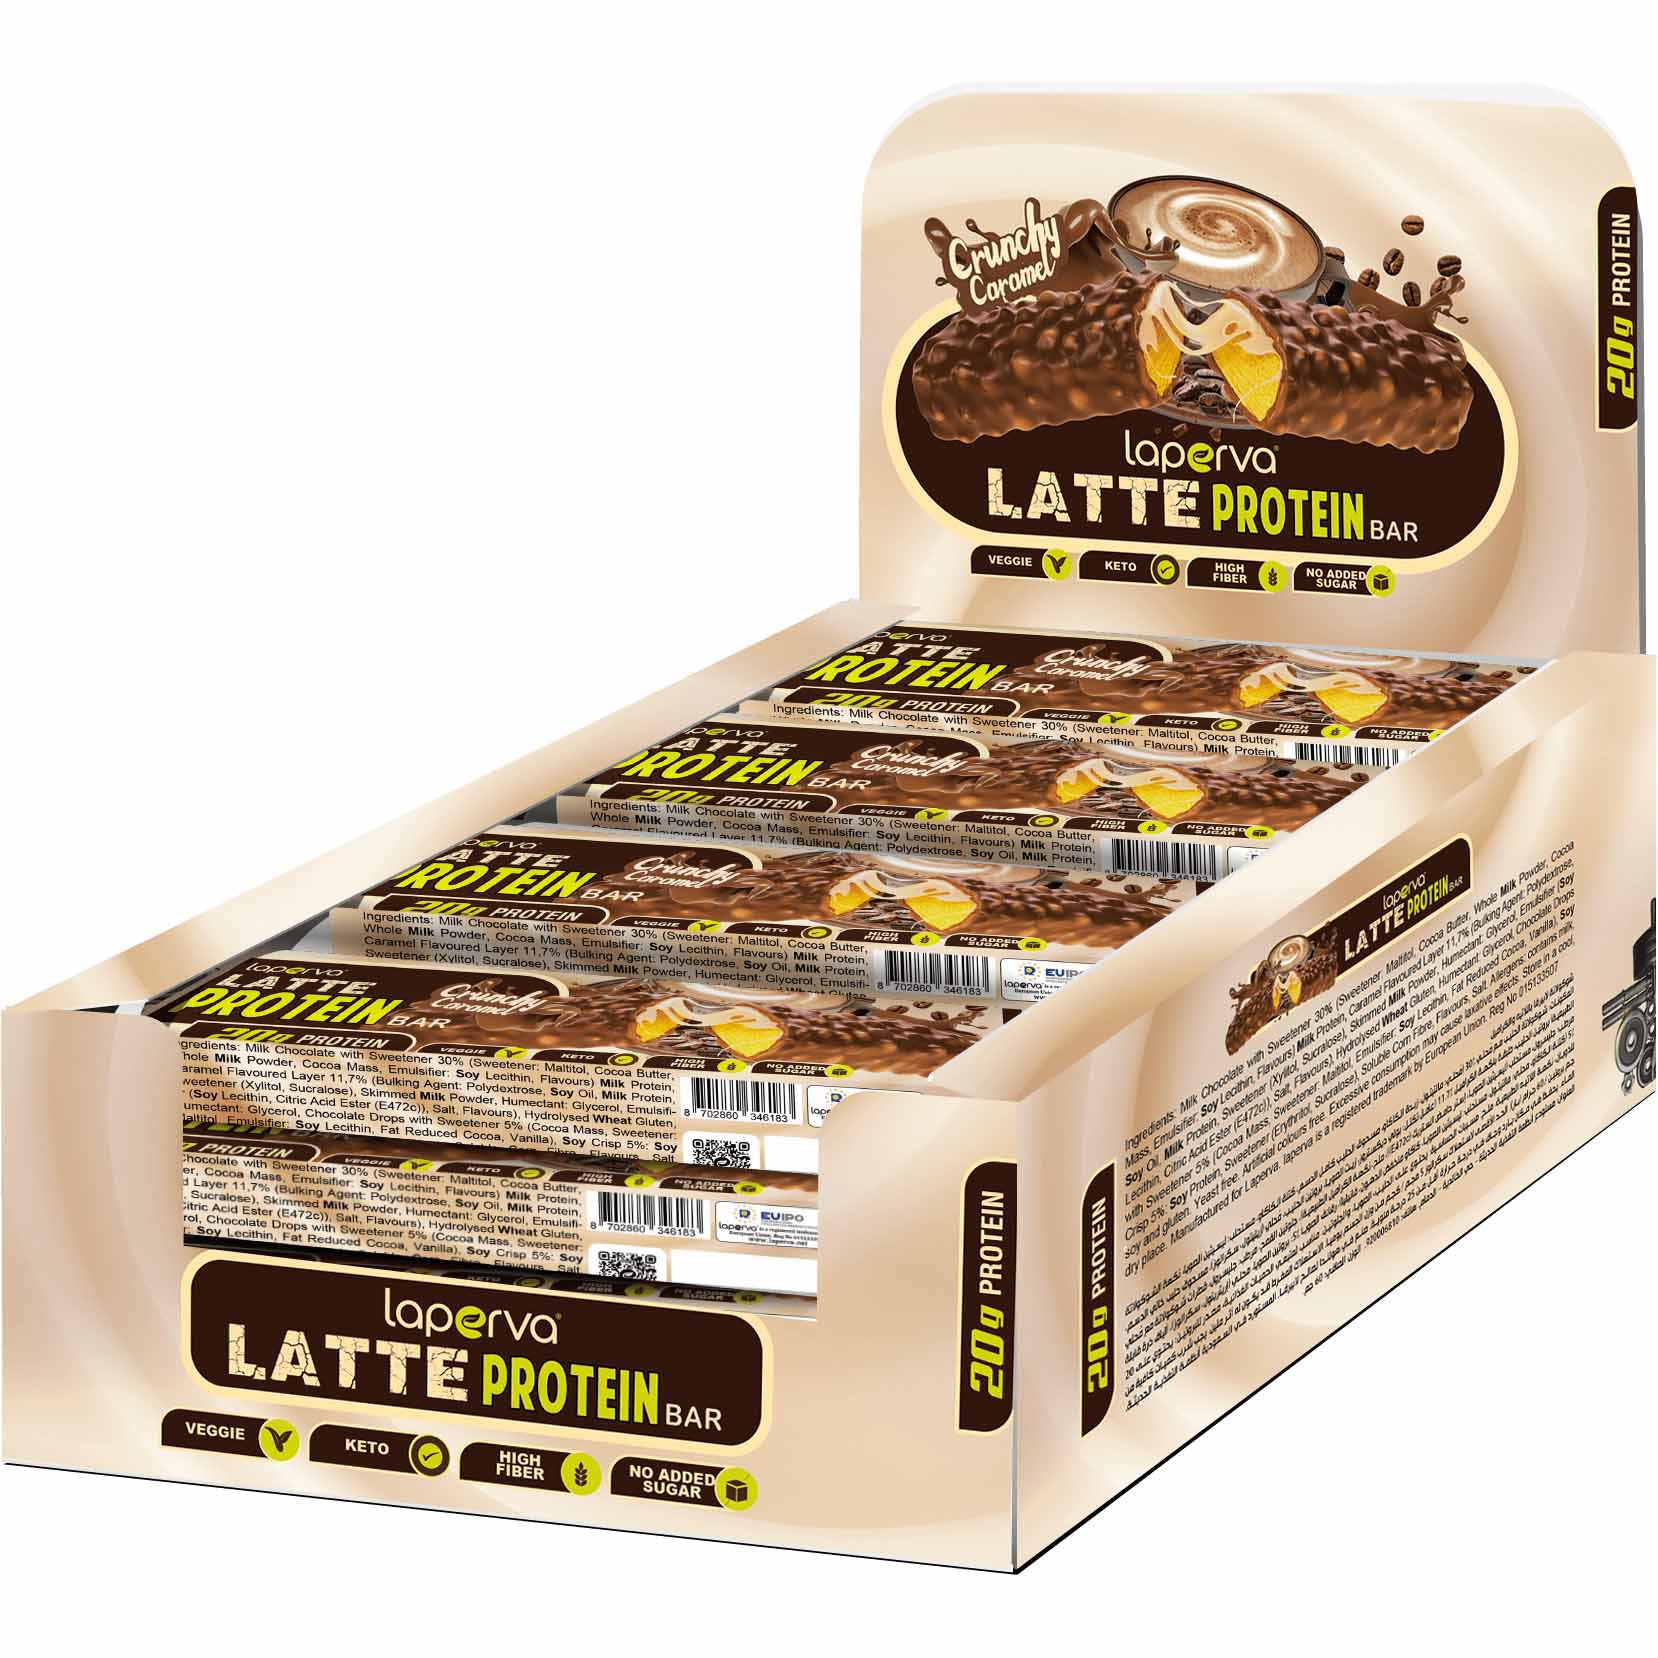 Laperva Latte Protein Bar Box of 12 Bars Crunchy Caramel